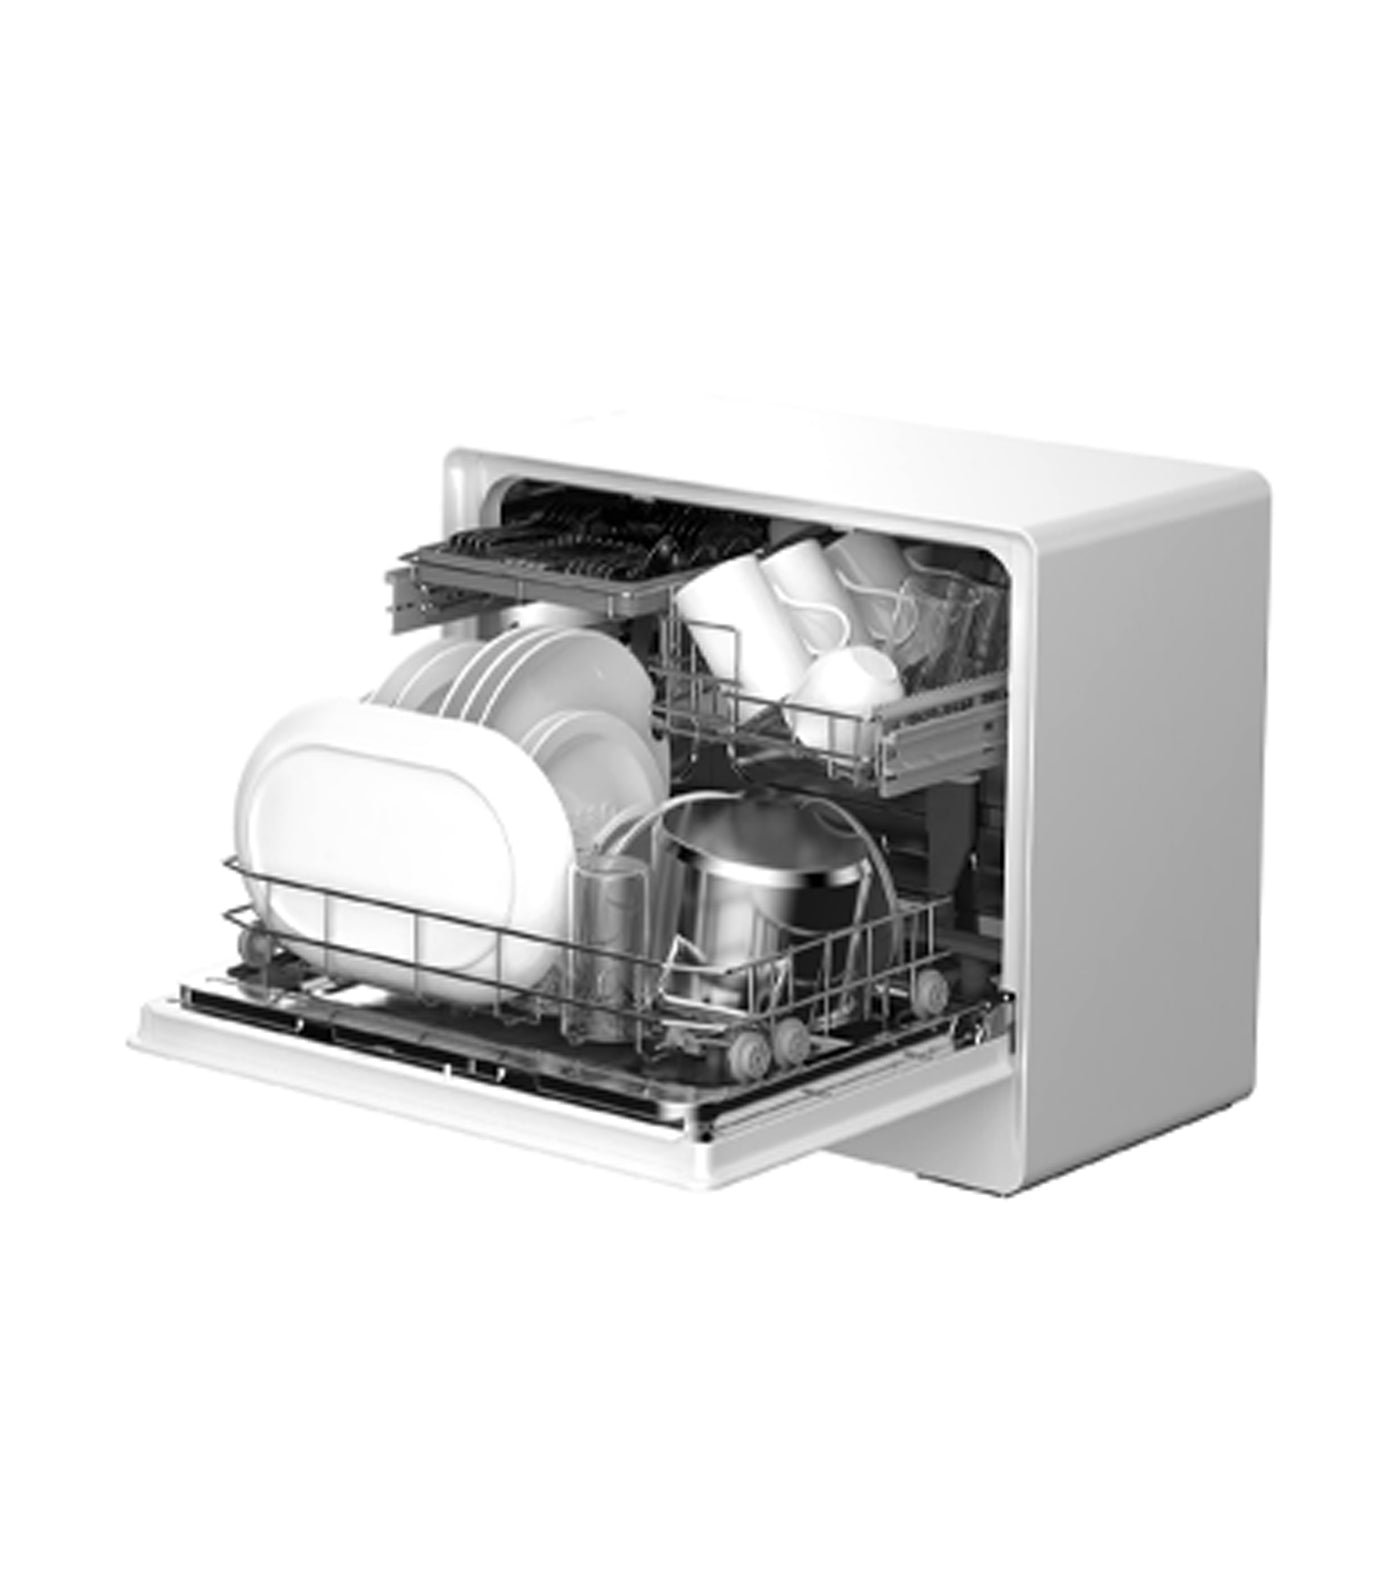 Maximus Slim Fit Tabletop Dishwasher - White